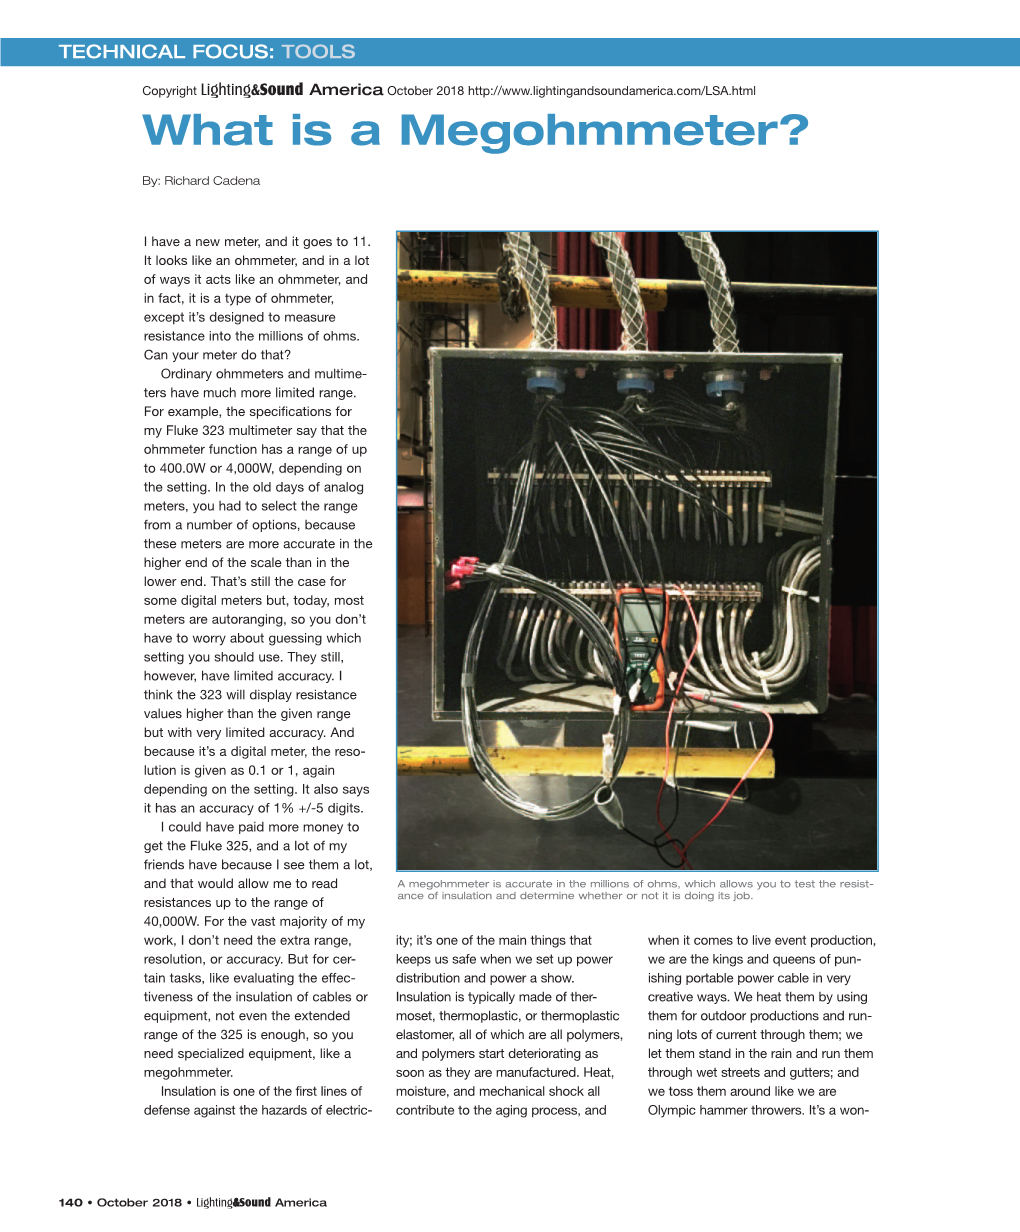 What Is a Megohmmeter?